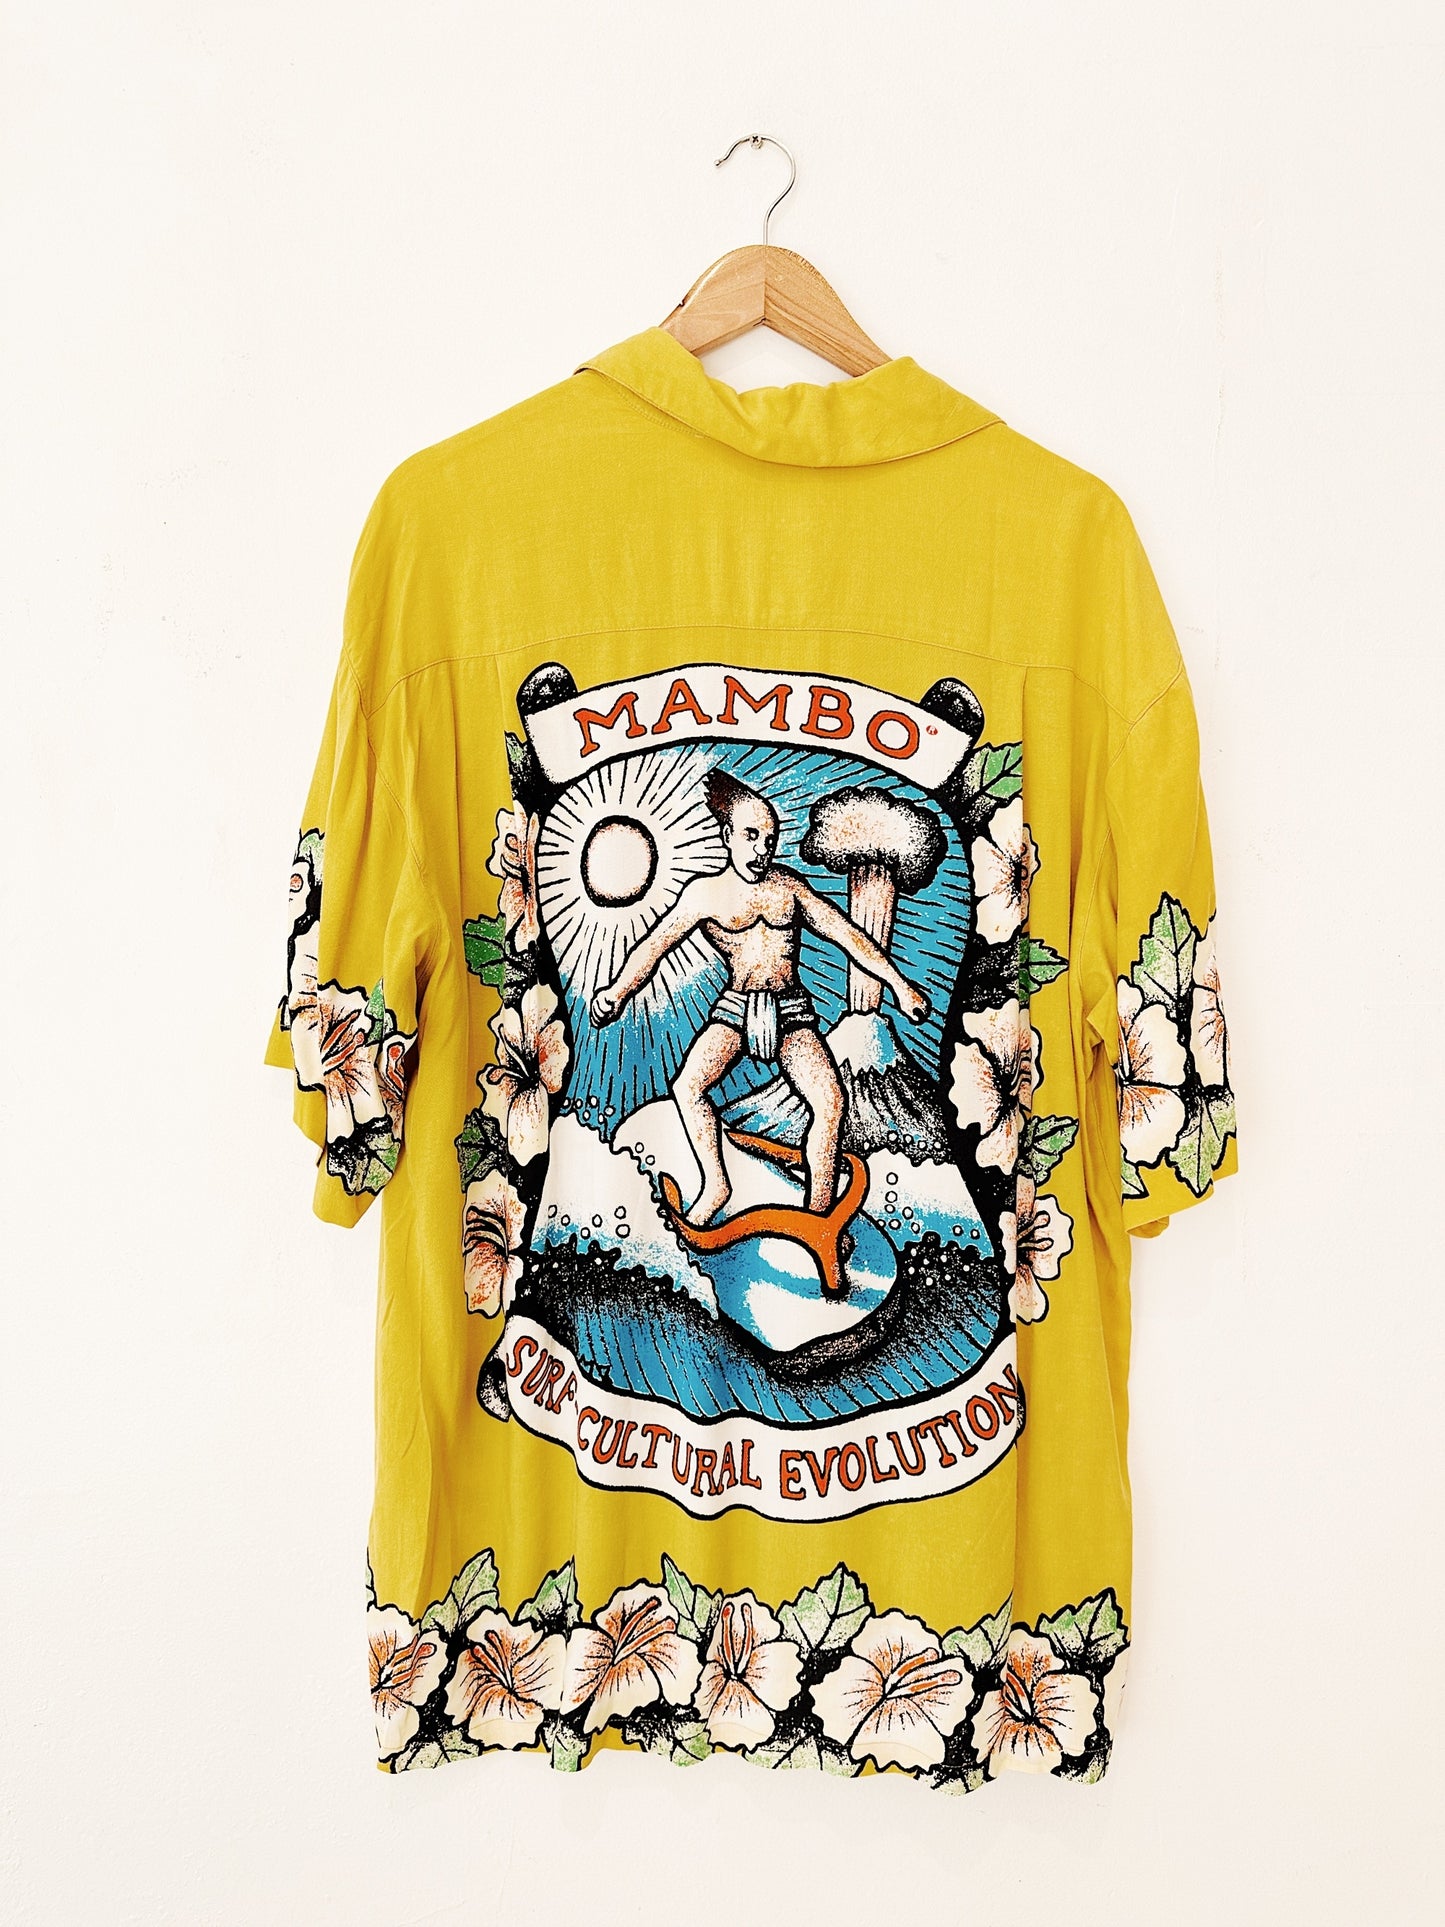 Reg Mombassa "Surf-Cultural Evolution" Vintage Mambo Loud Shirt 13